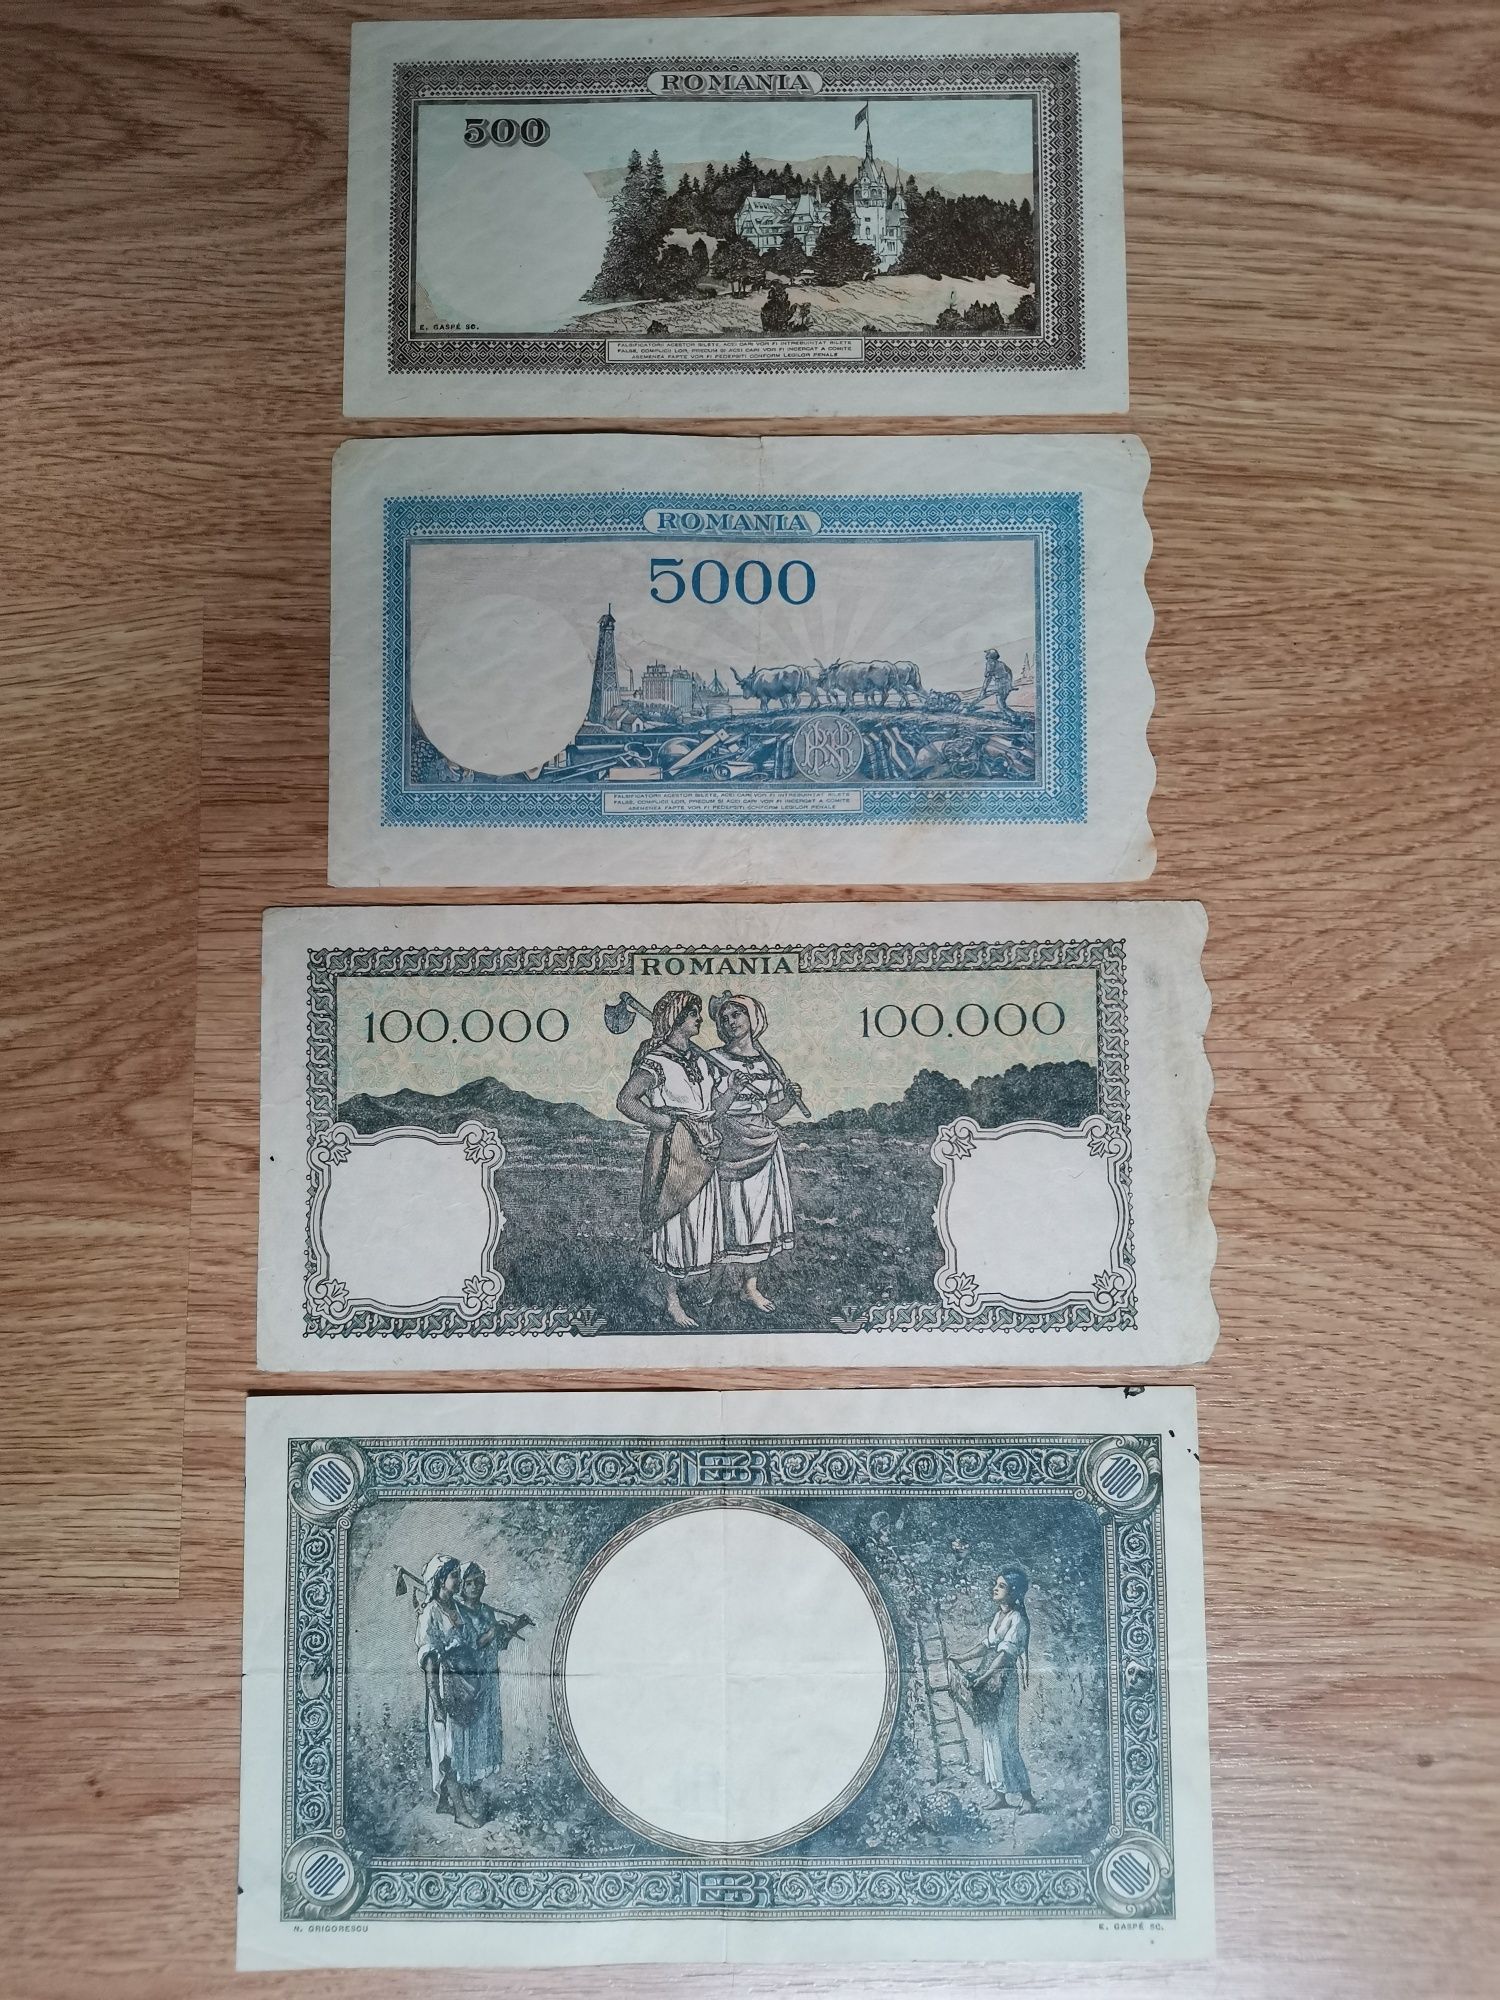 Bancnote vechi romanesti.